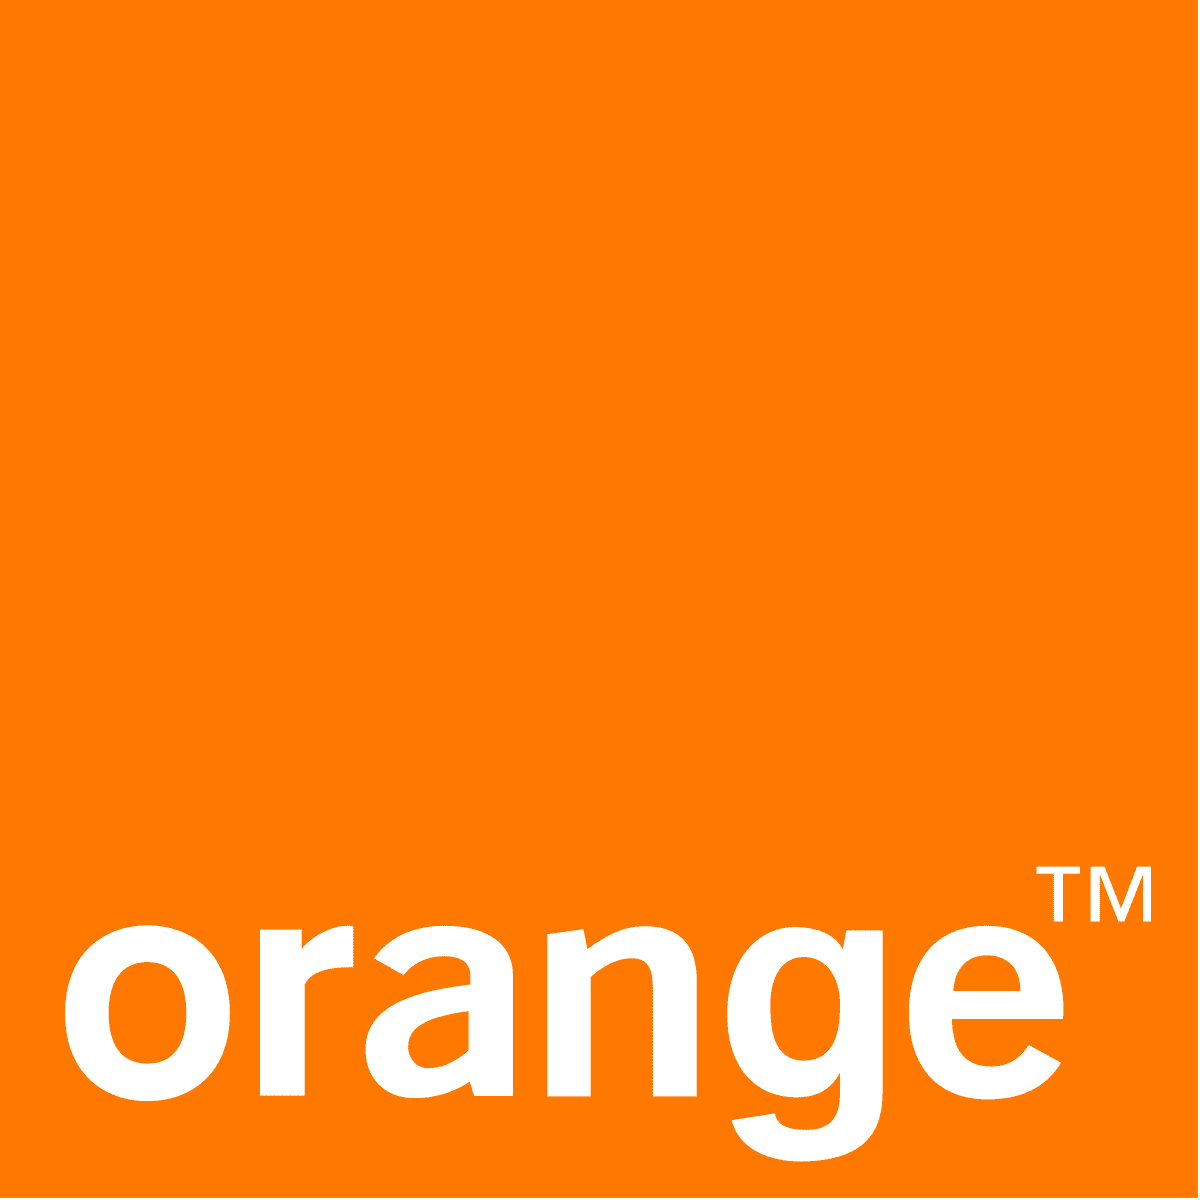 Does Orange offer eSIM